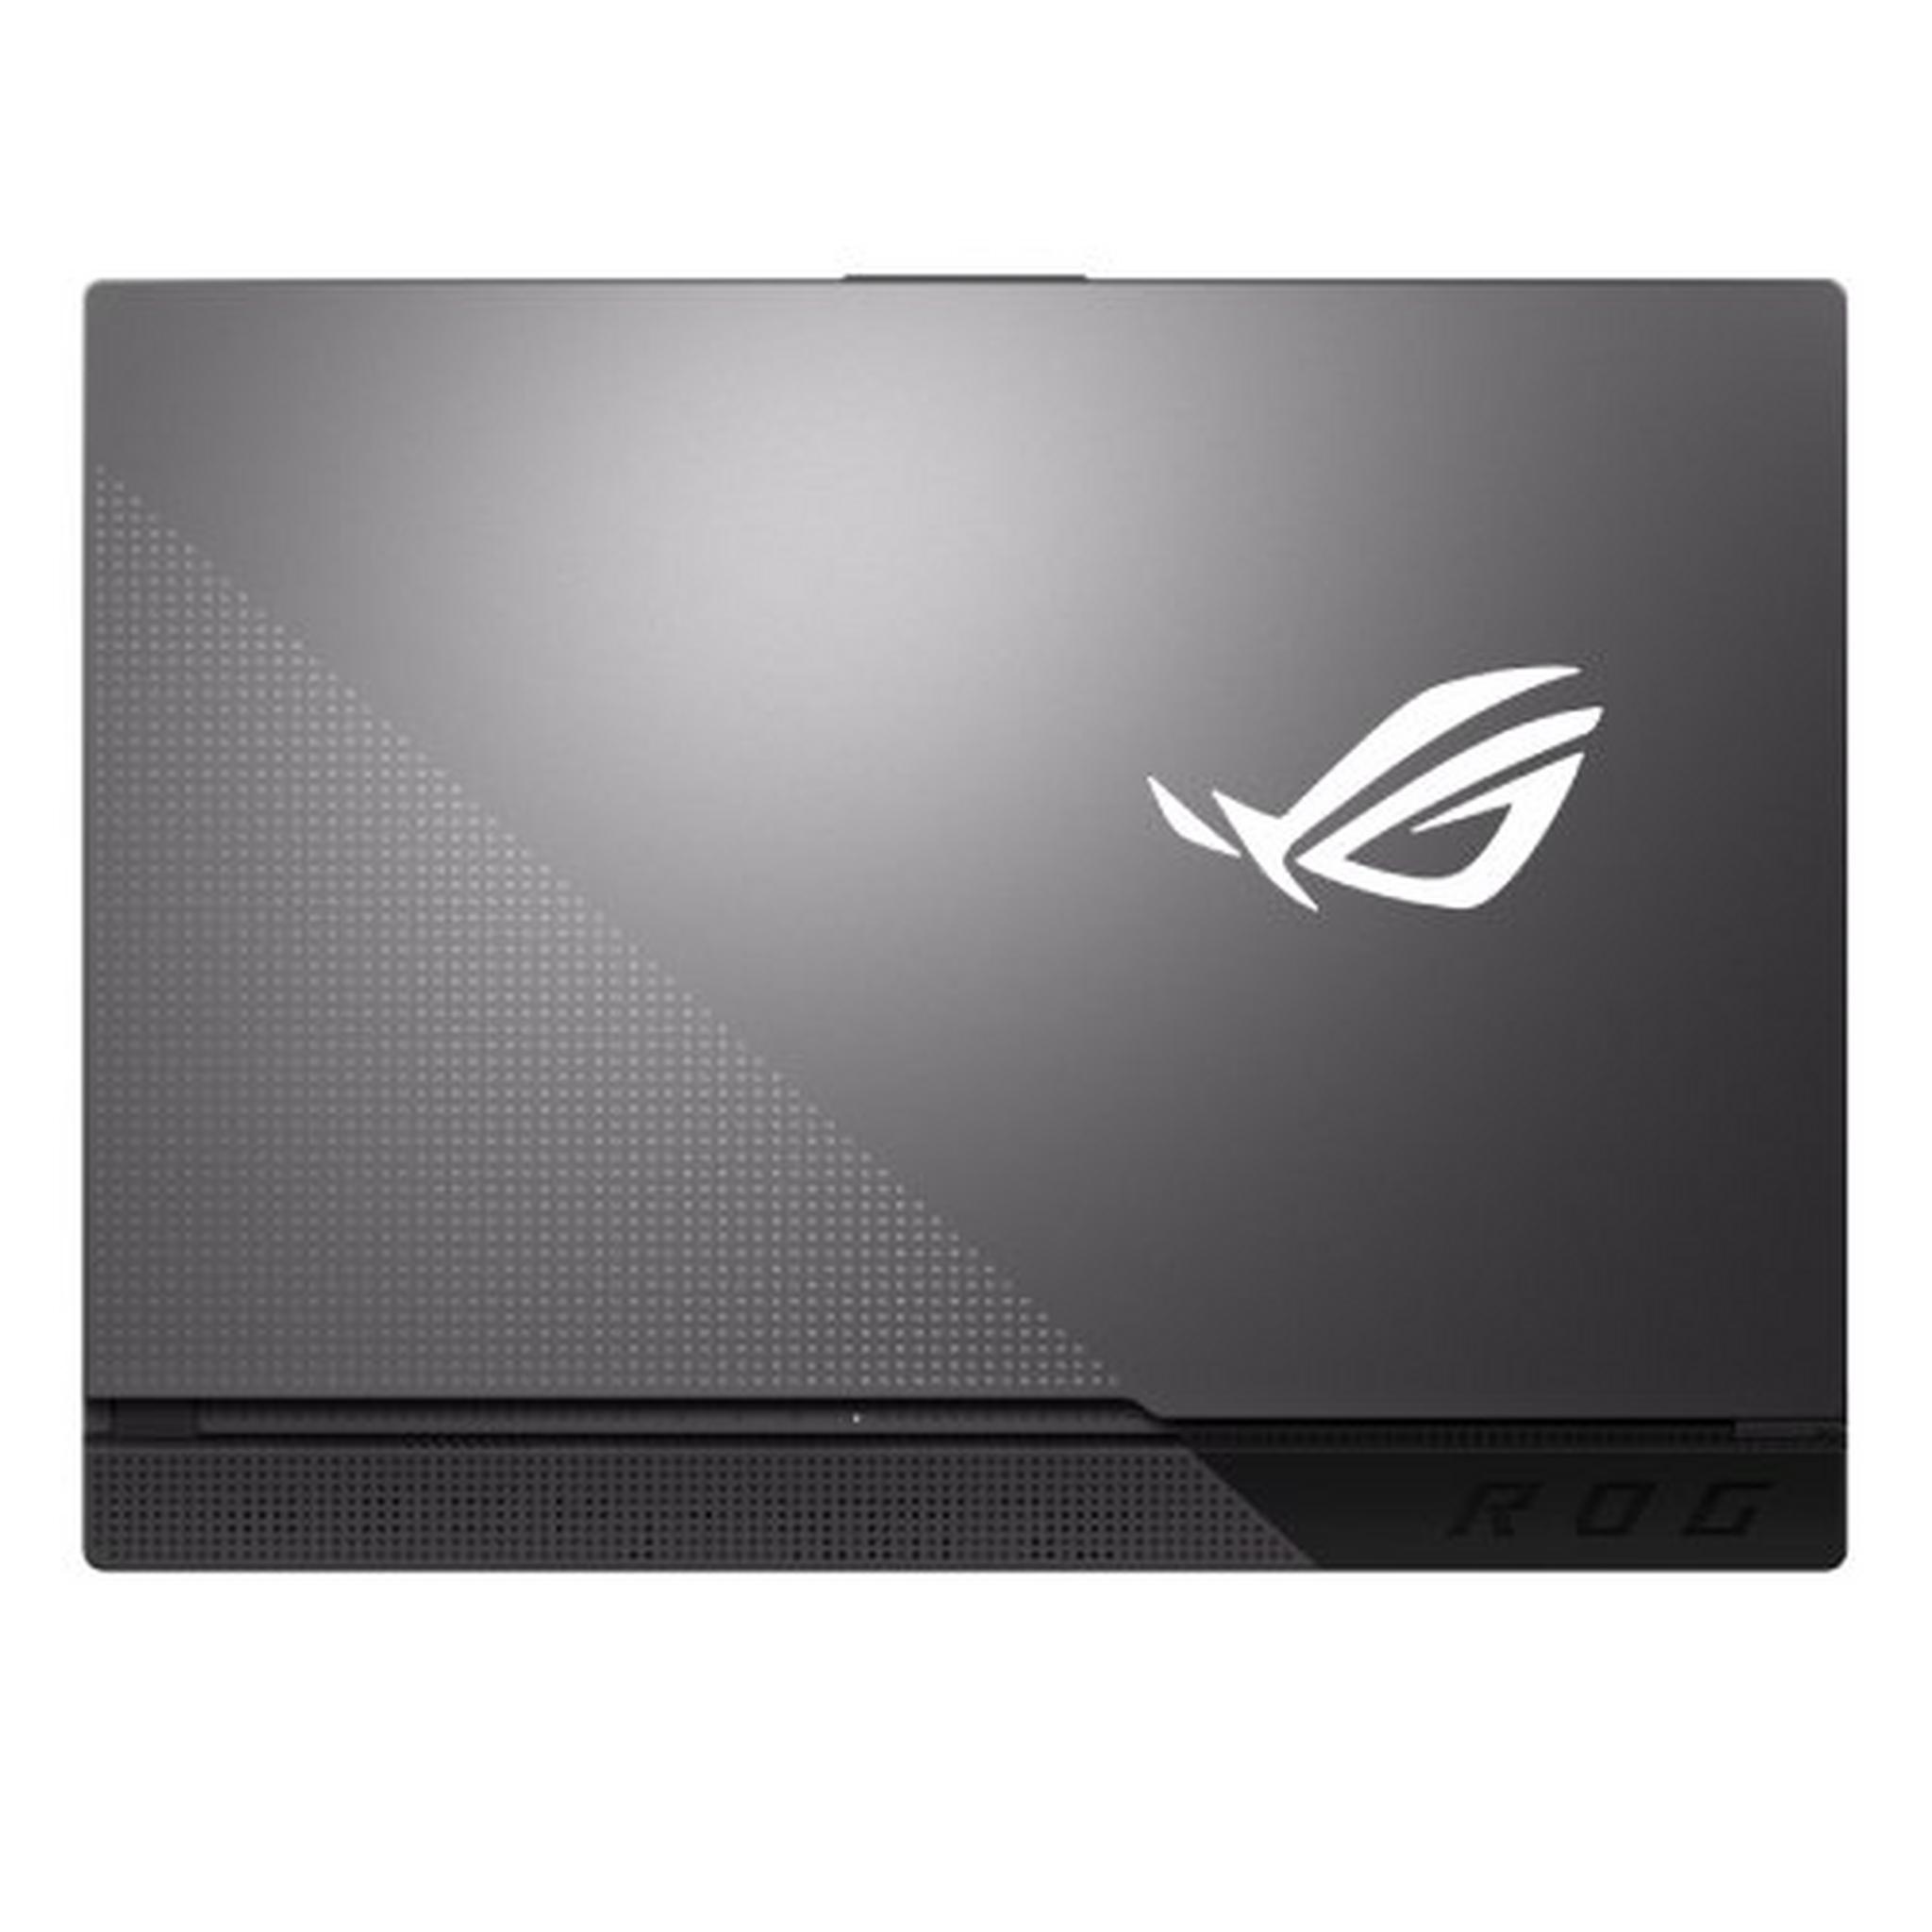 Asus Rog Strix G15 (2021), AMD Ryzen 7, Nvidia Geforce RTX 3060 6GB, RAM 16GB, SSD 1TB, 15.6" Gaming Laptop - Eclipse Gray (G513QM-HN027T)